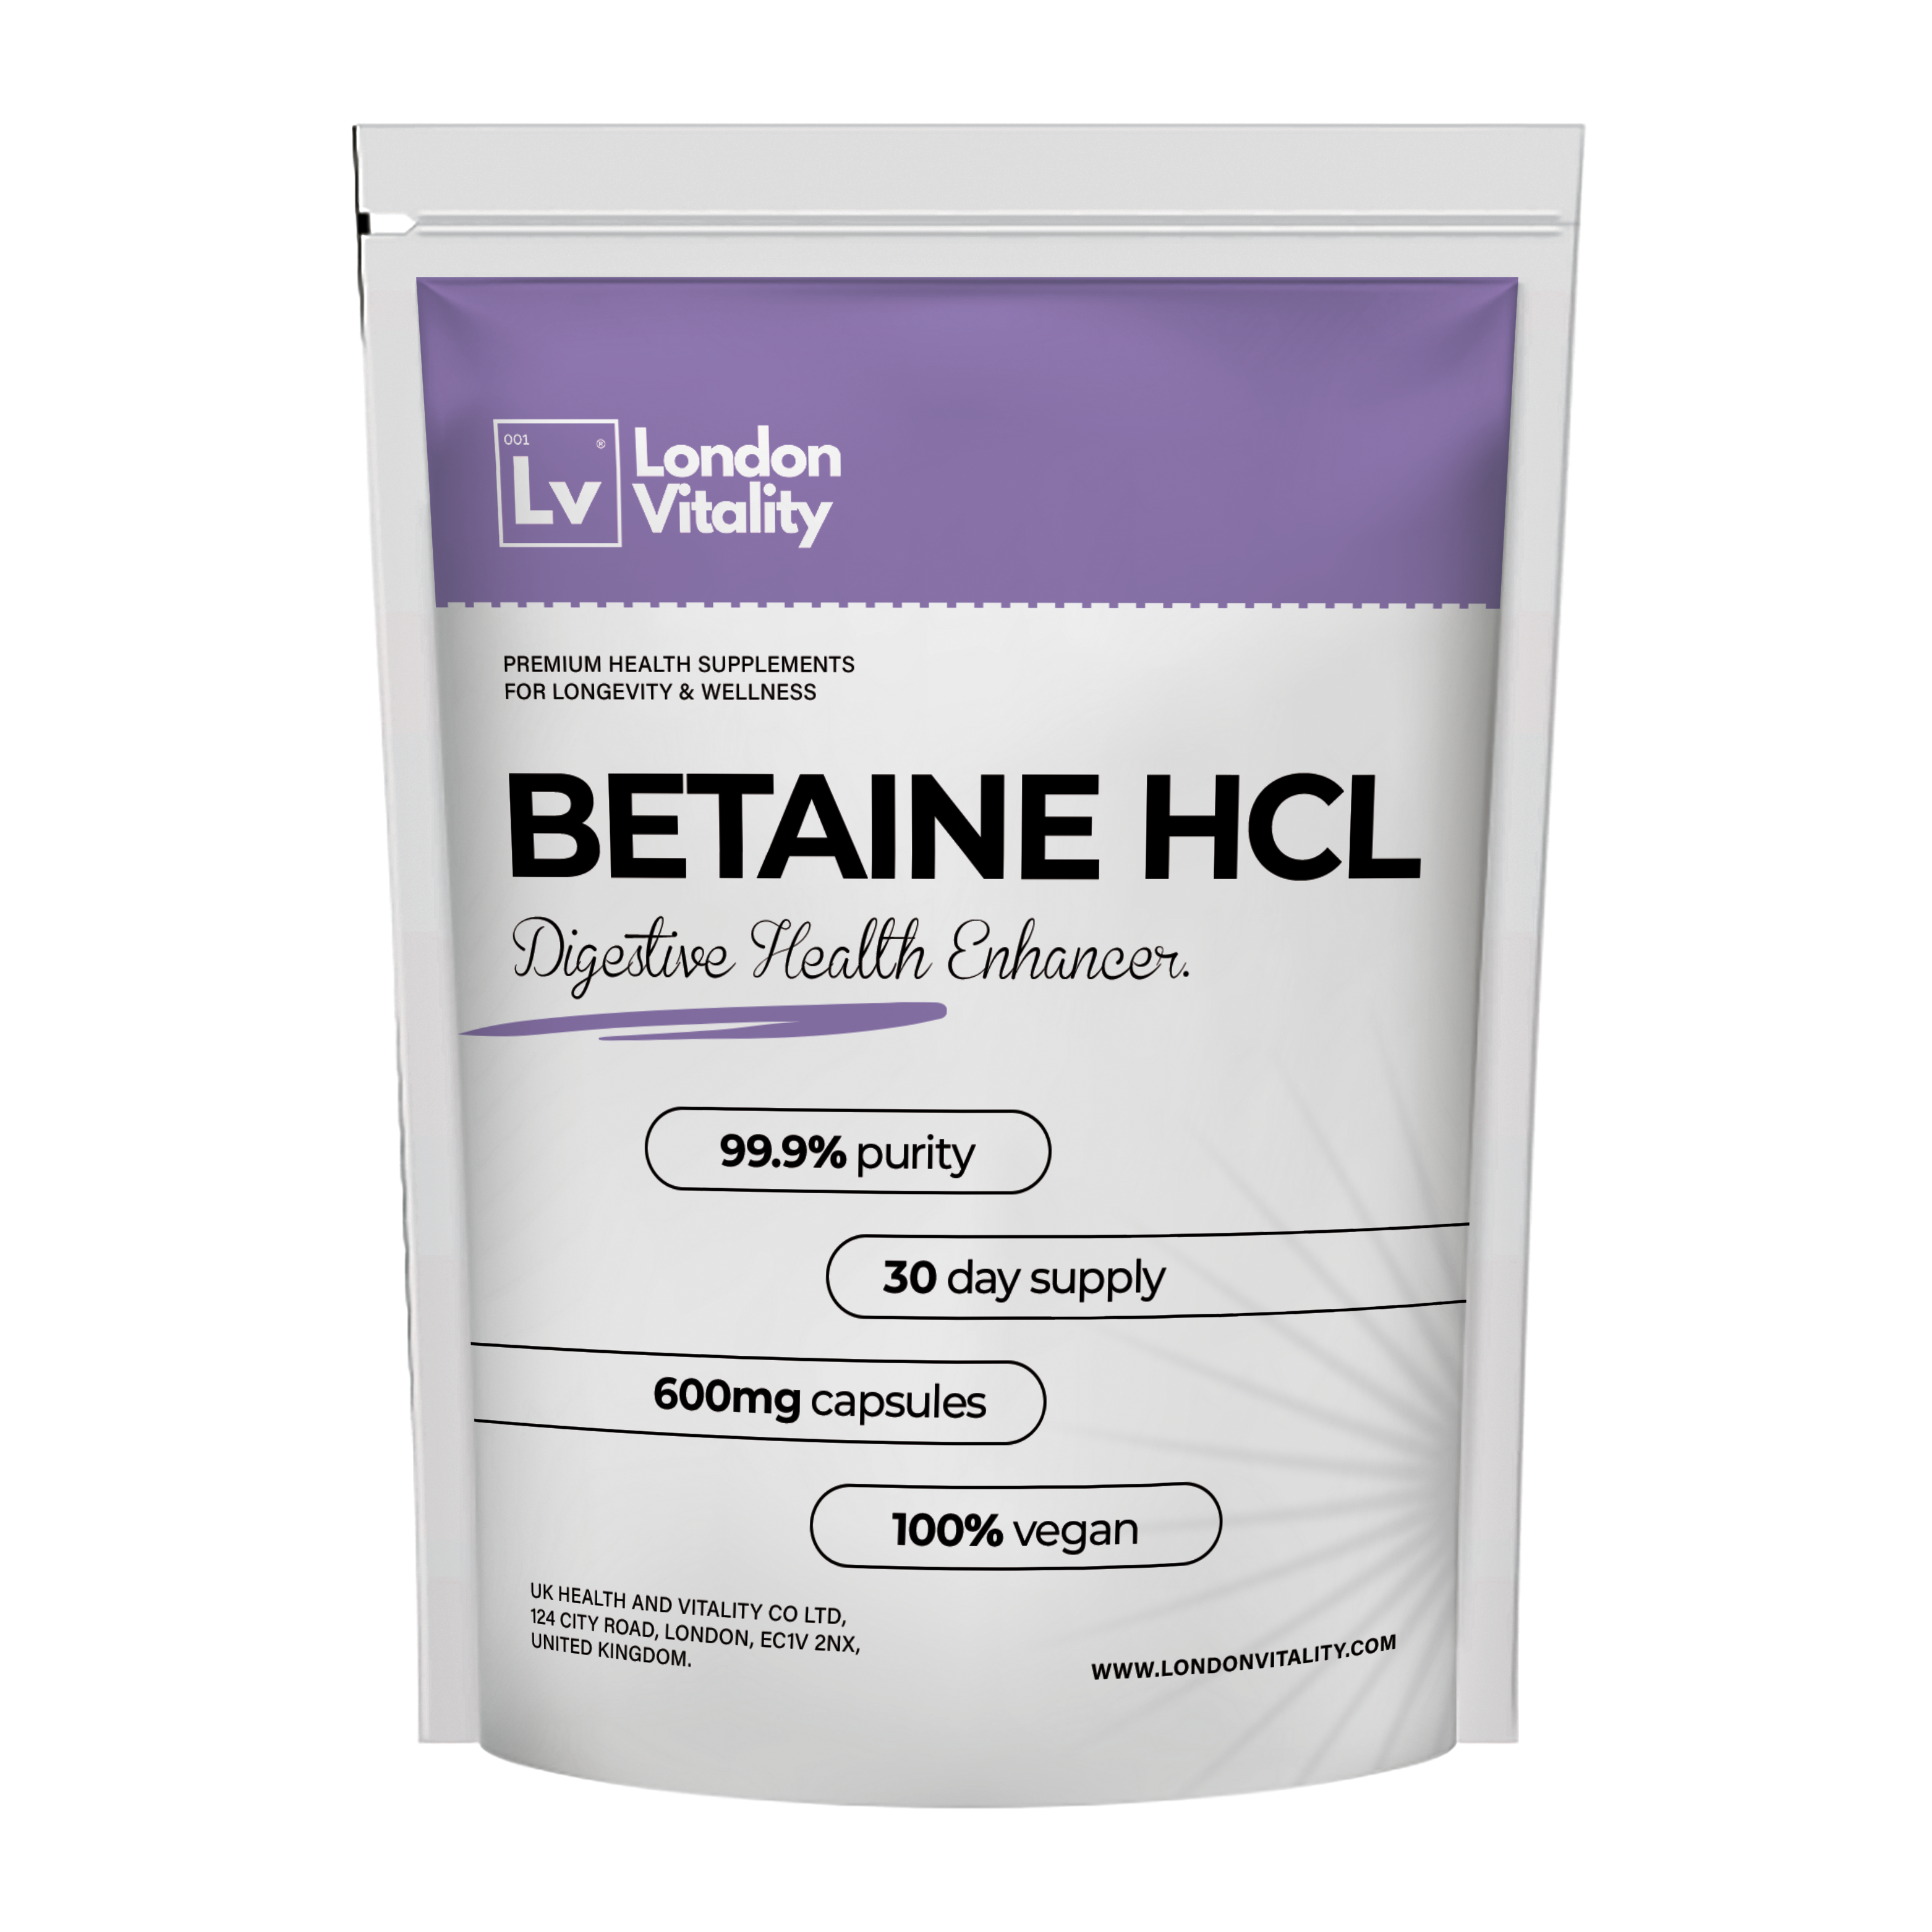 Betaine HCL: Digestive Health Enhancer